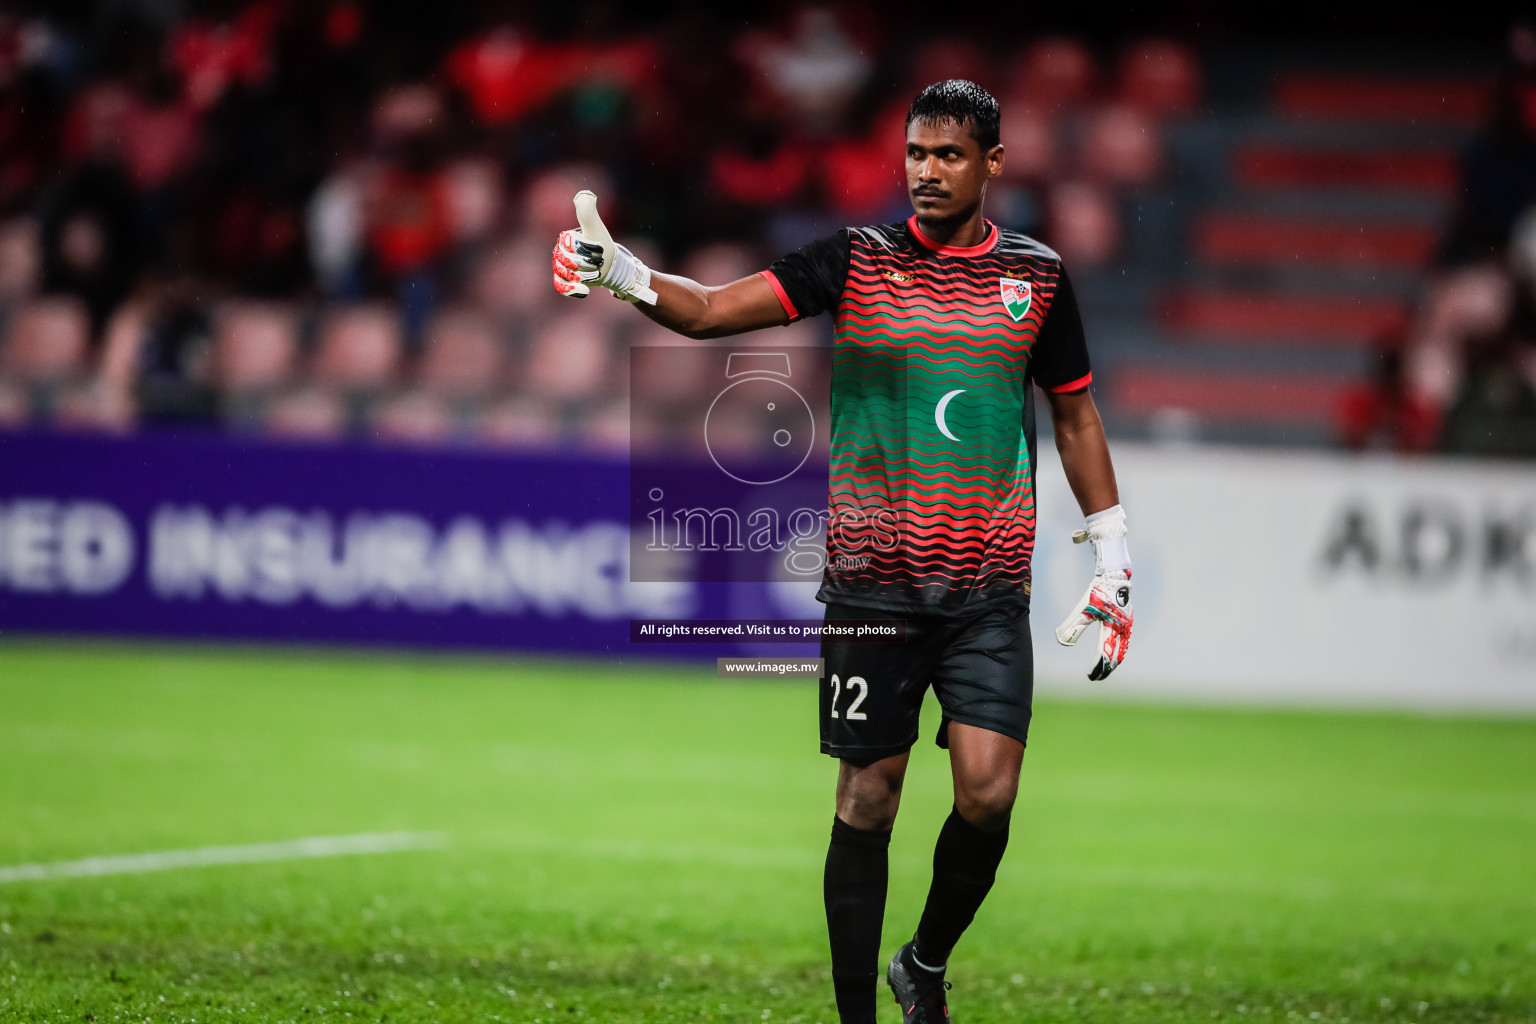 Maldives vs Nepal in SAFF Championship 2021 held on 1st October 2021 in Galolhu National Stadium, Male', Maldives